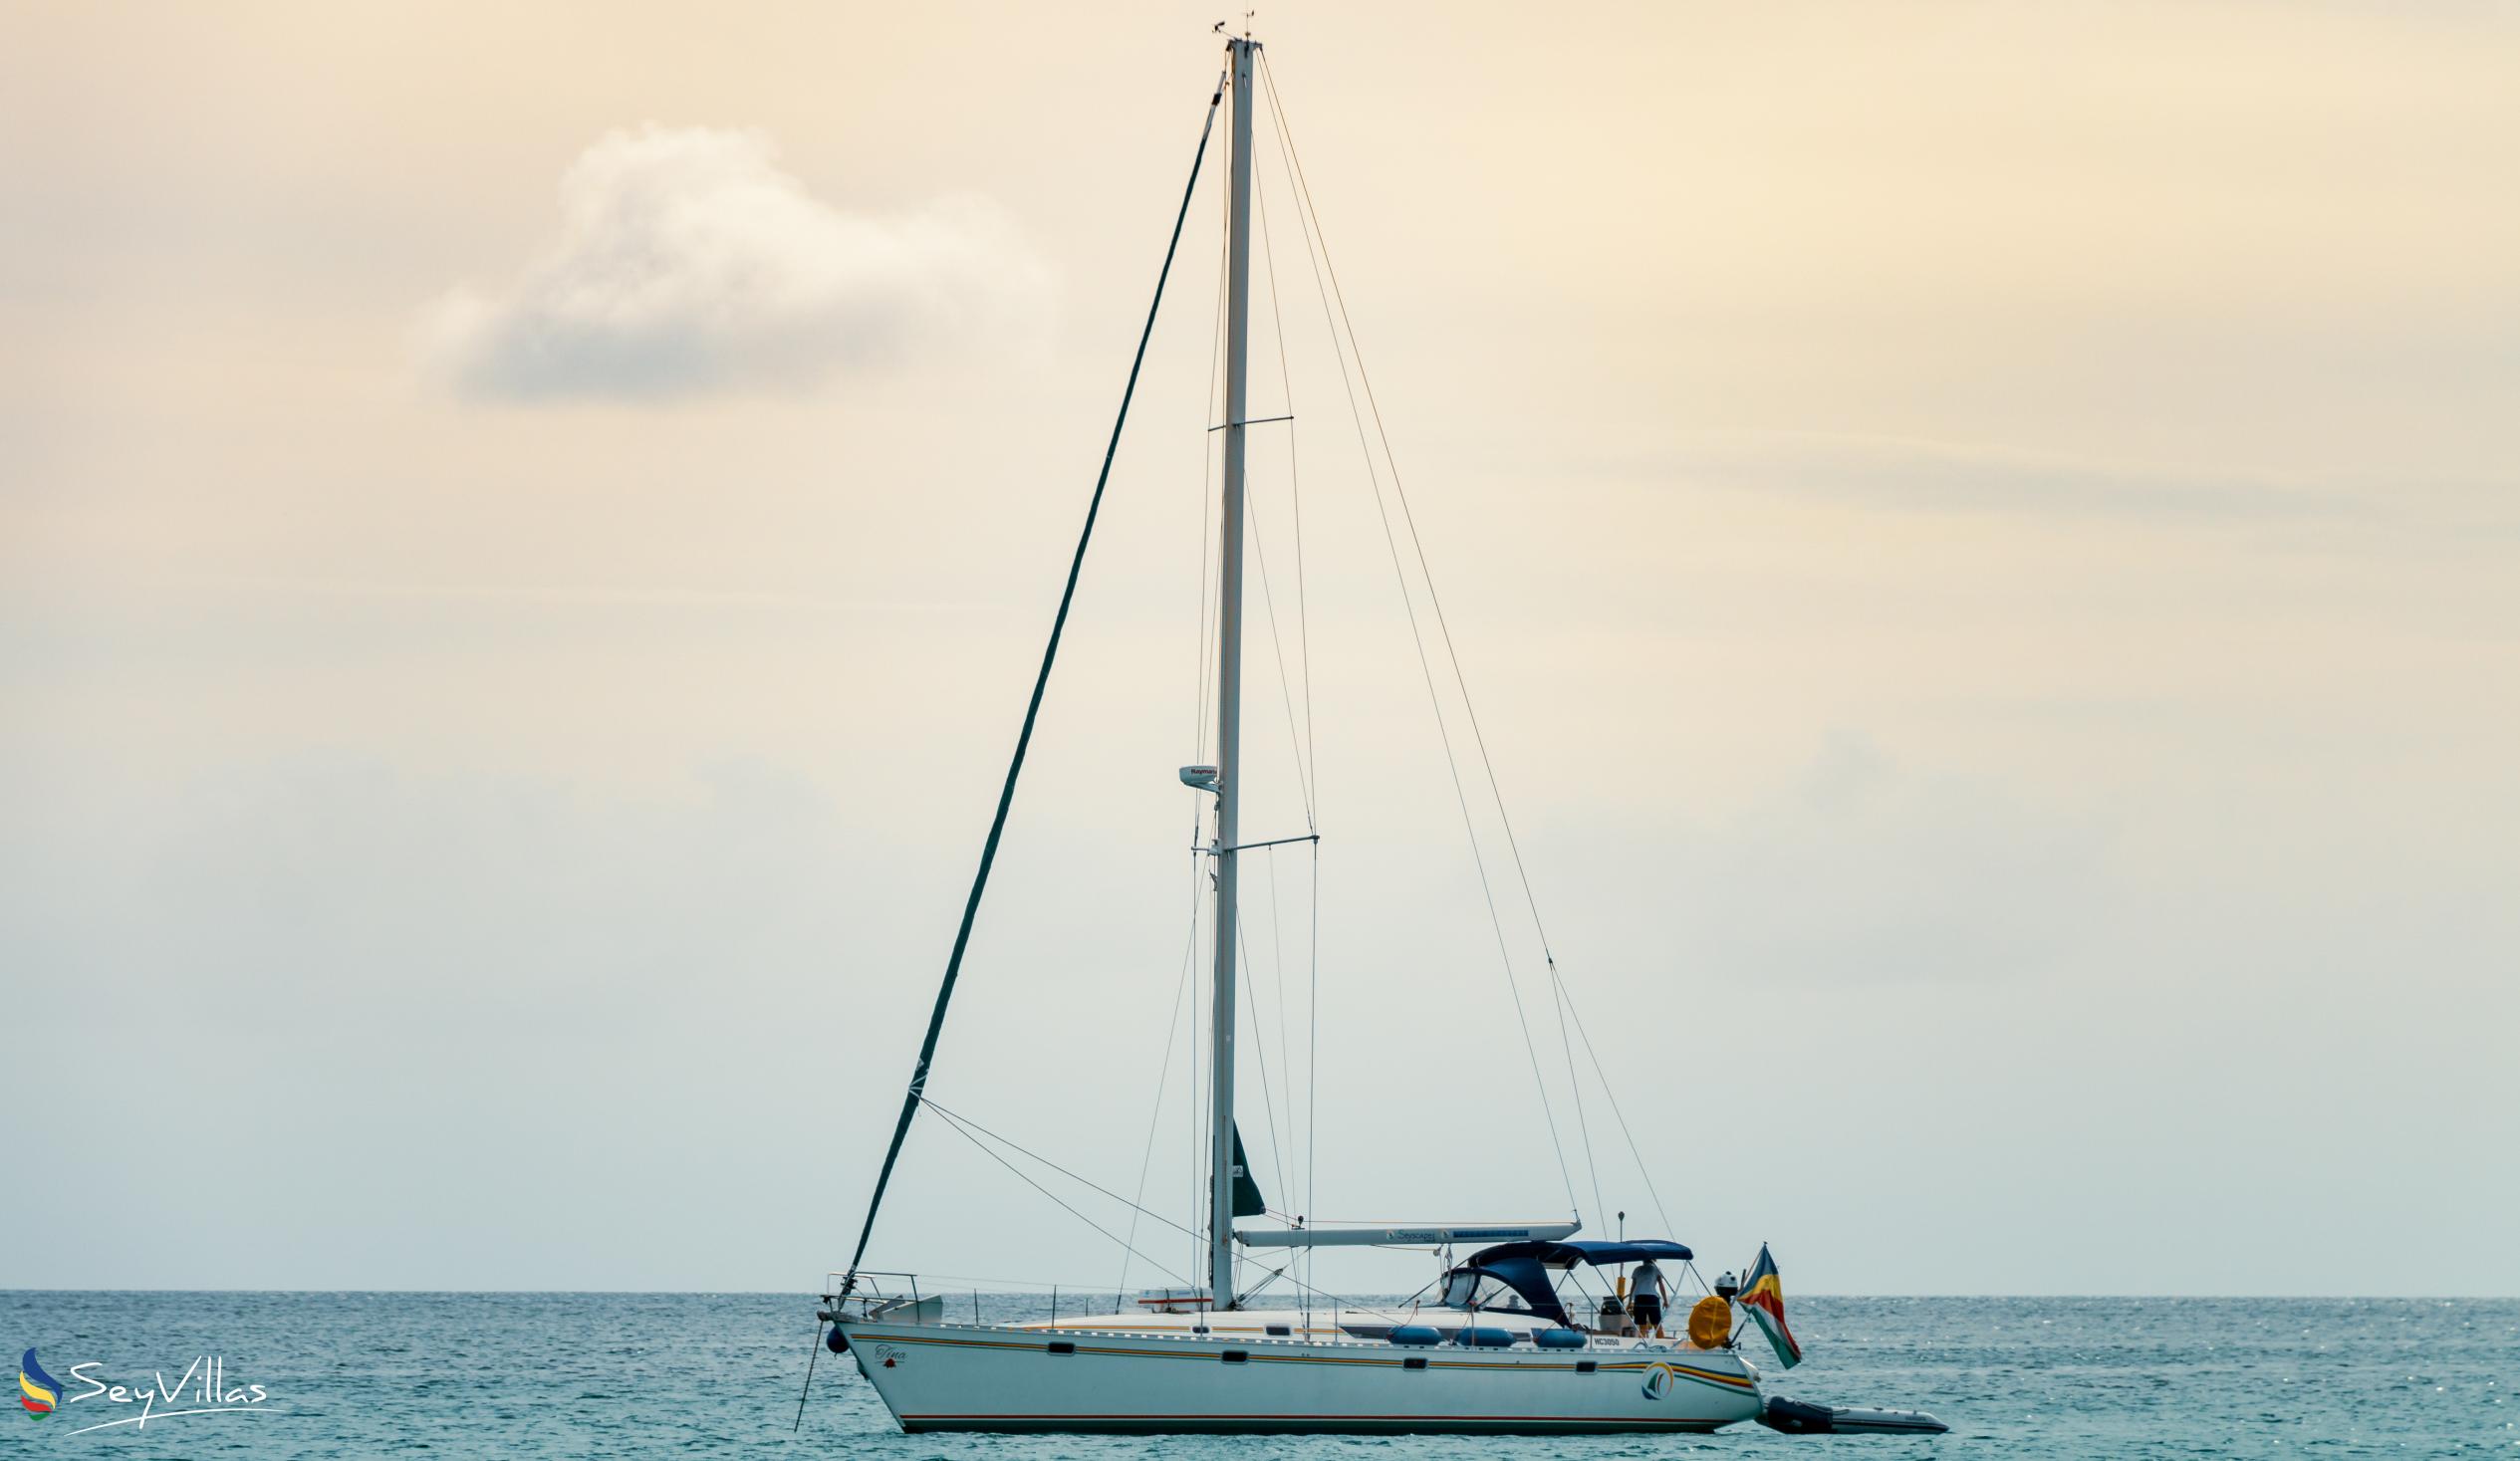 Foto 5: Seyscapes Yacht Charter - Aussenbereich - Seychellen (Seychellen)